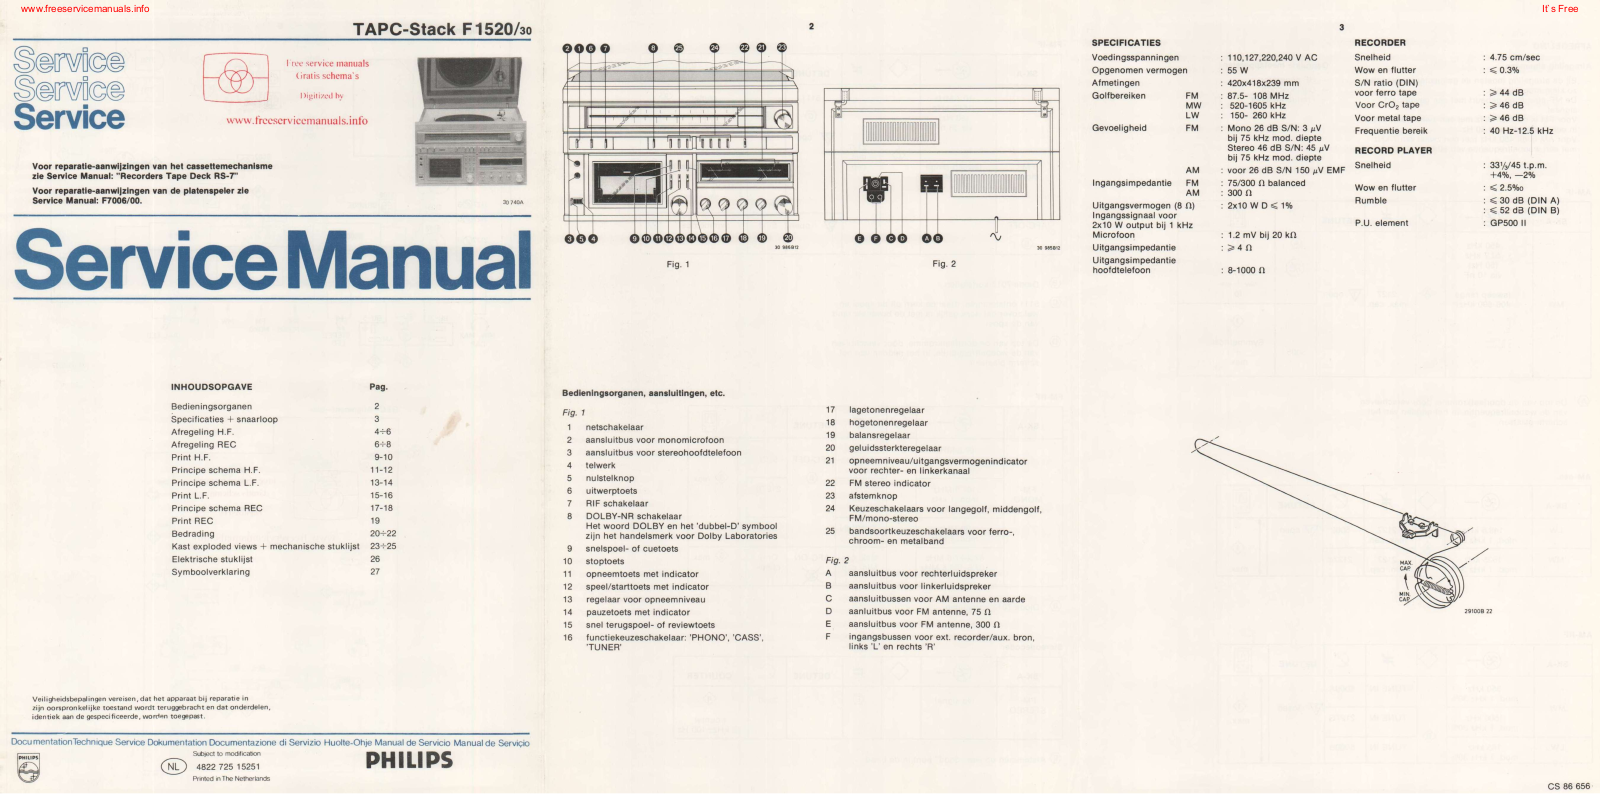 Philips TAPCF-1520 Service Manual